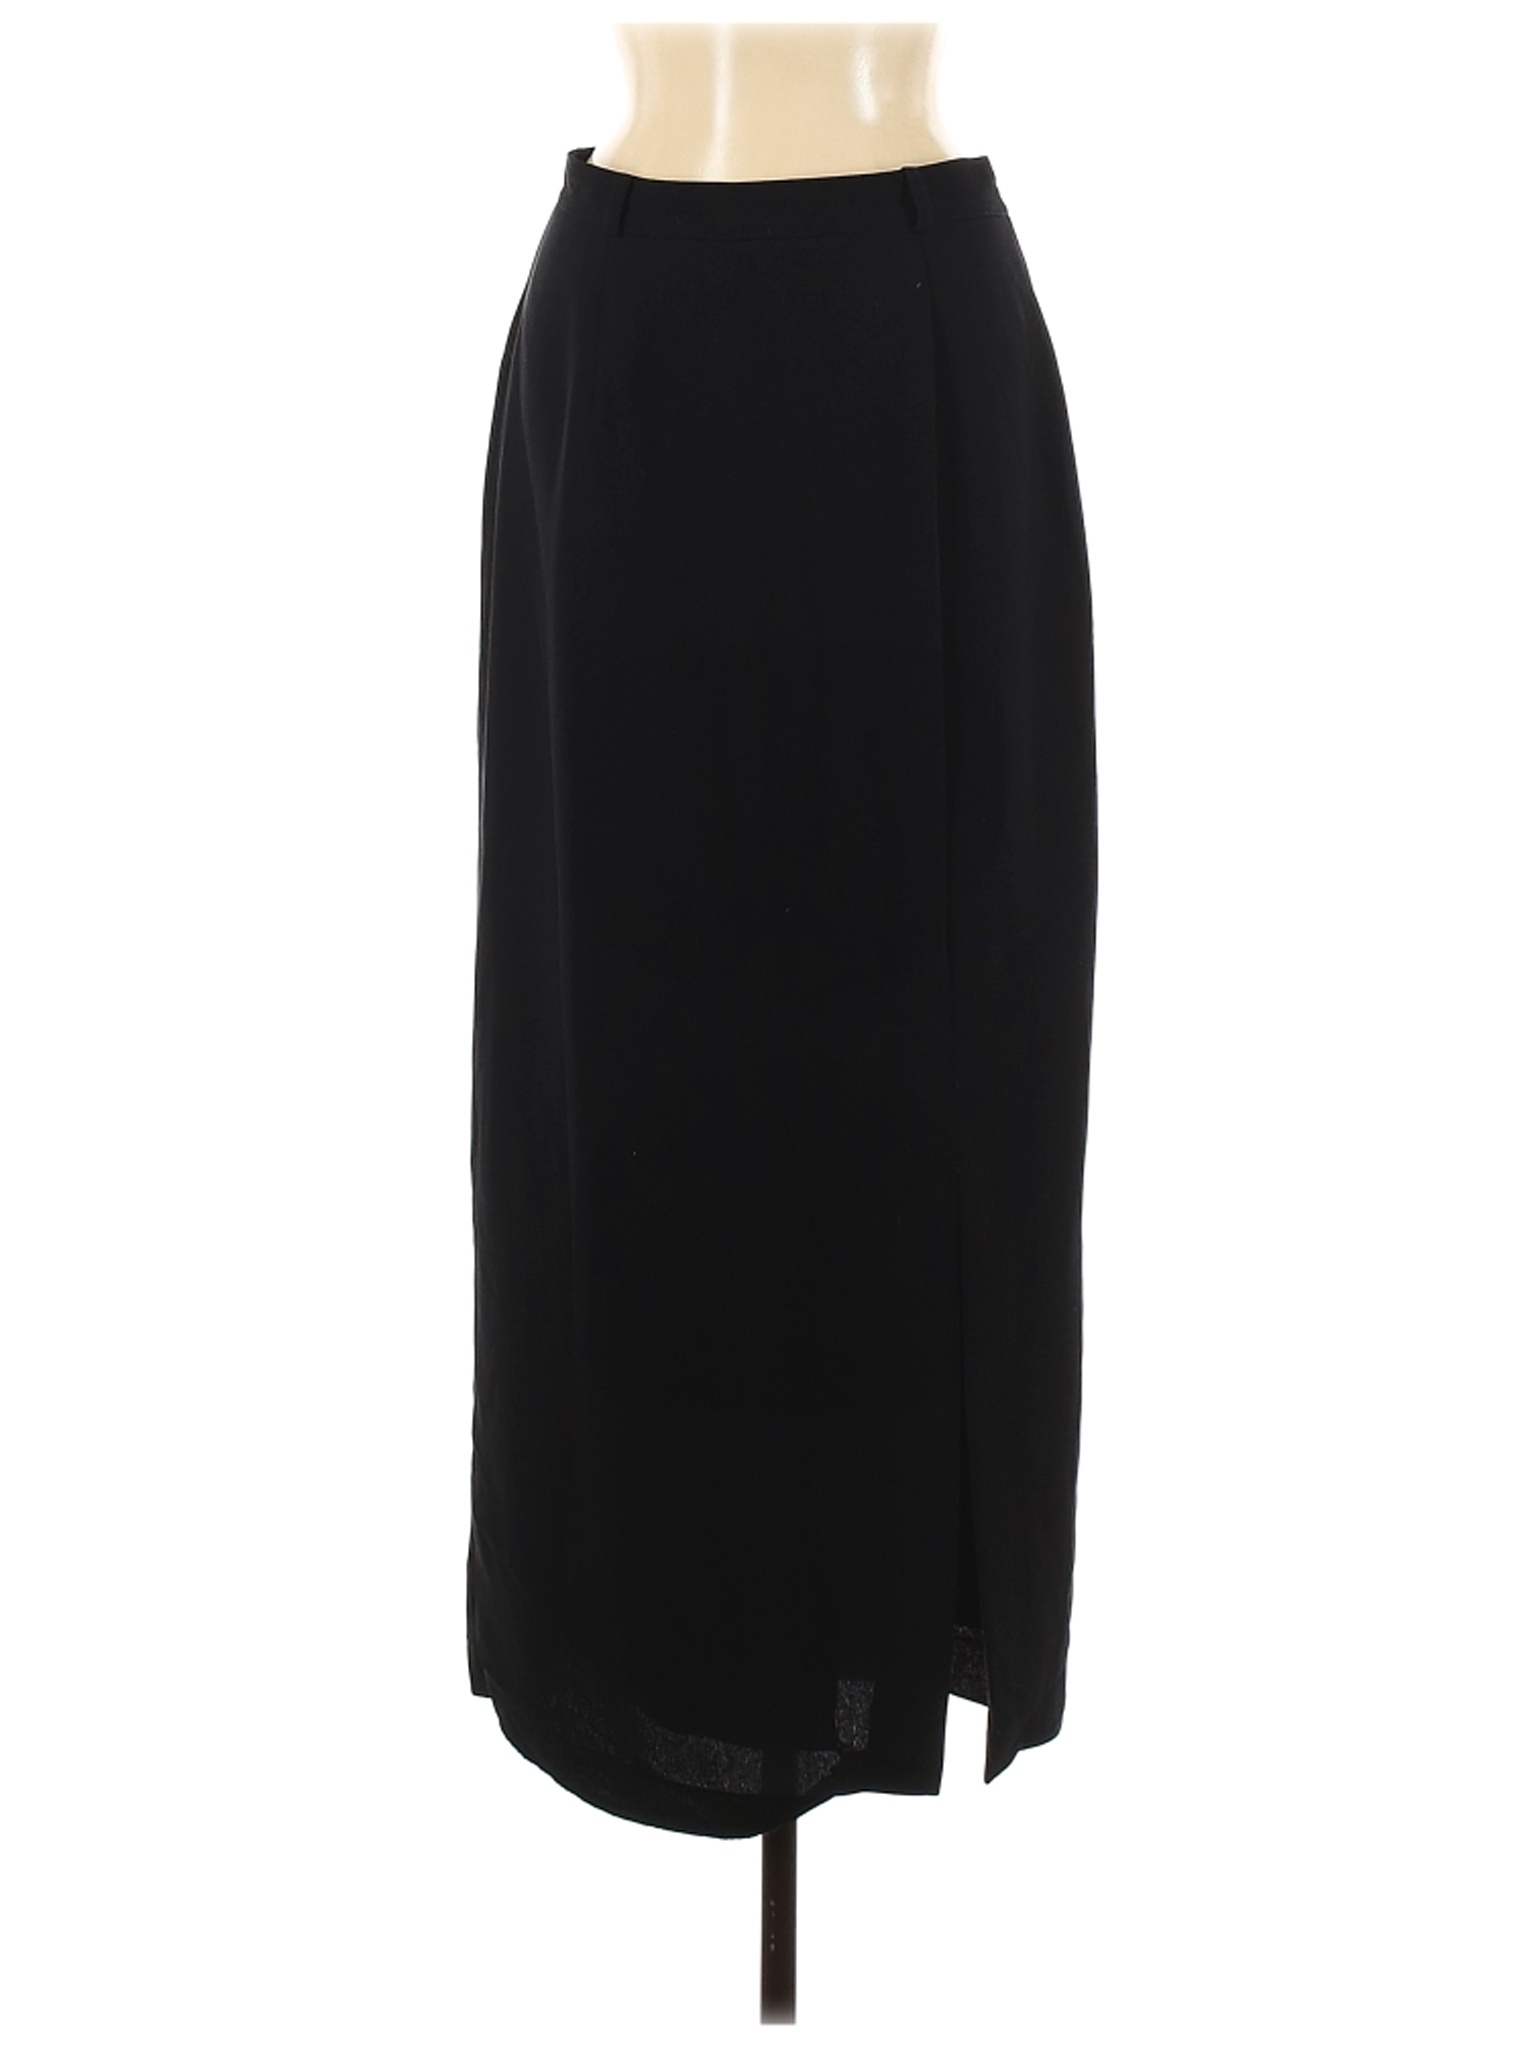 Sport Collection Women Black Casual Skirt 8 | eBay